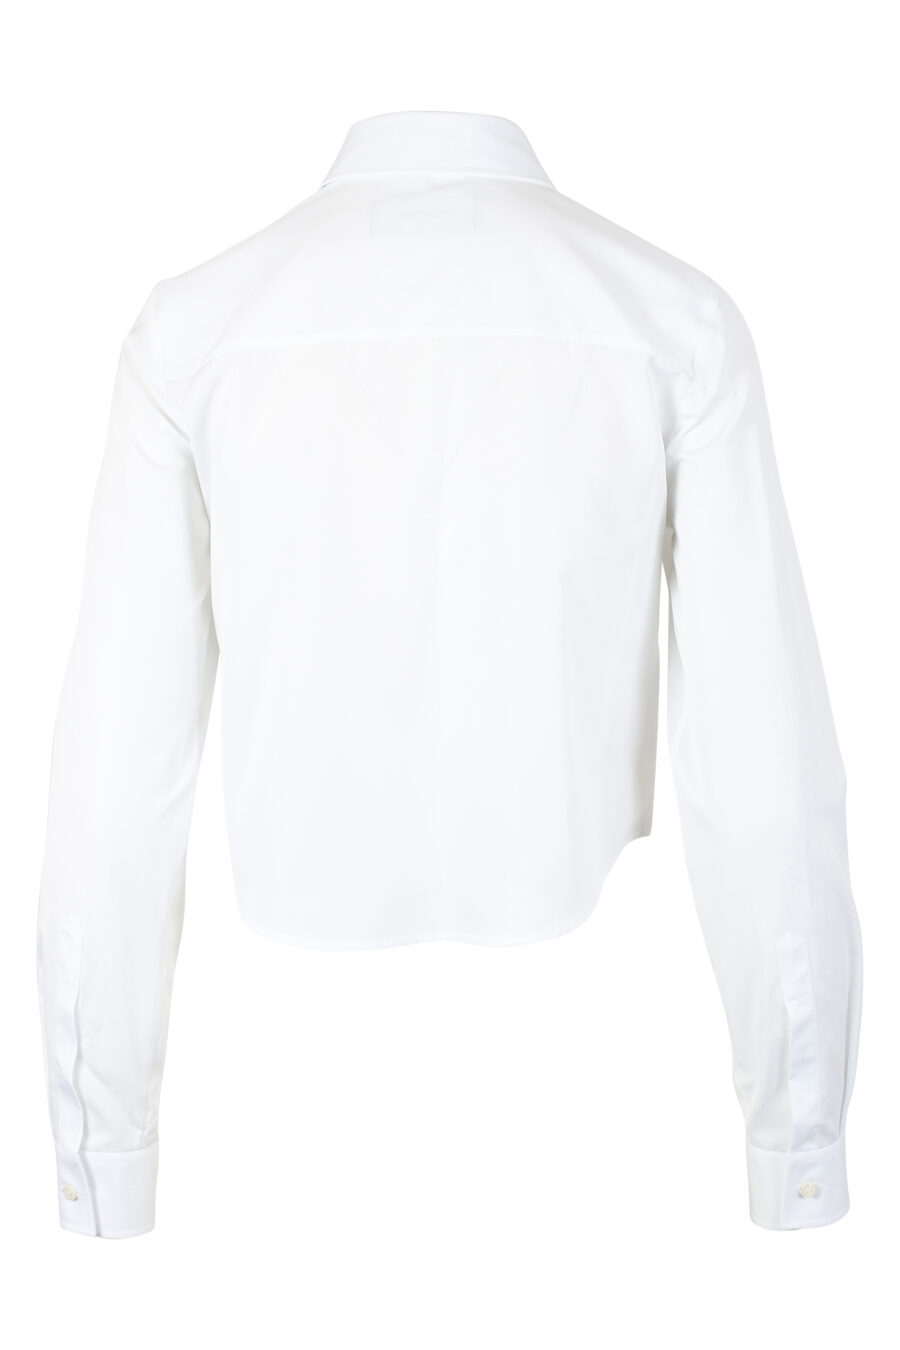 Camisa curta branca com mini-logotipo duplo - IMG 9794